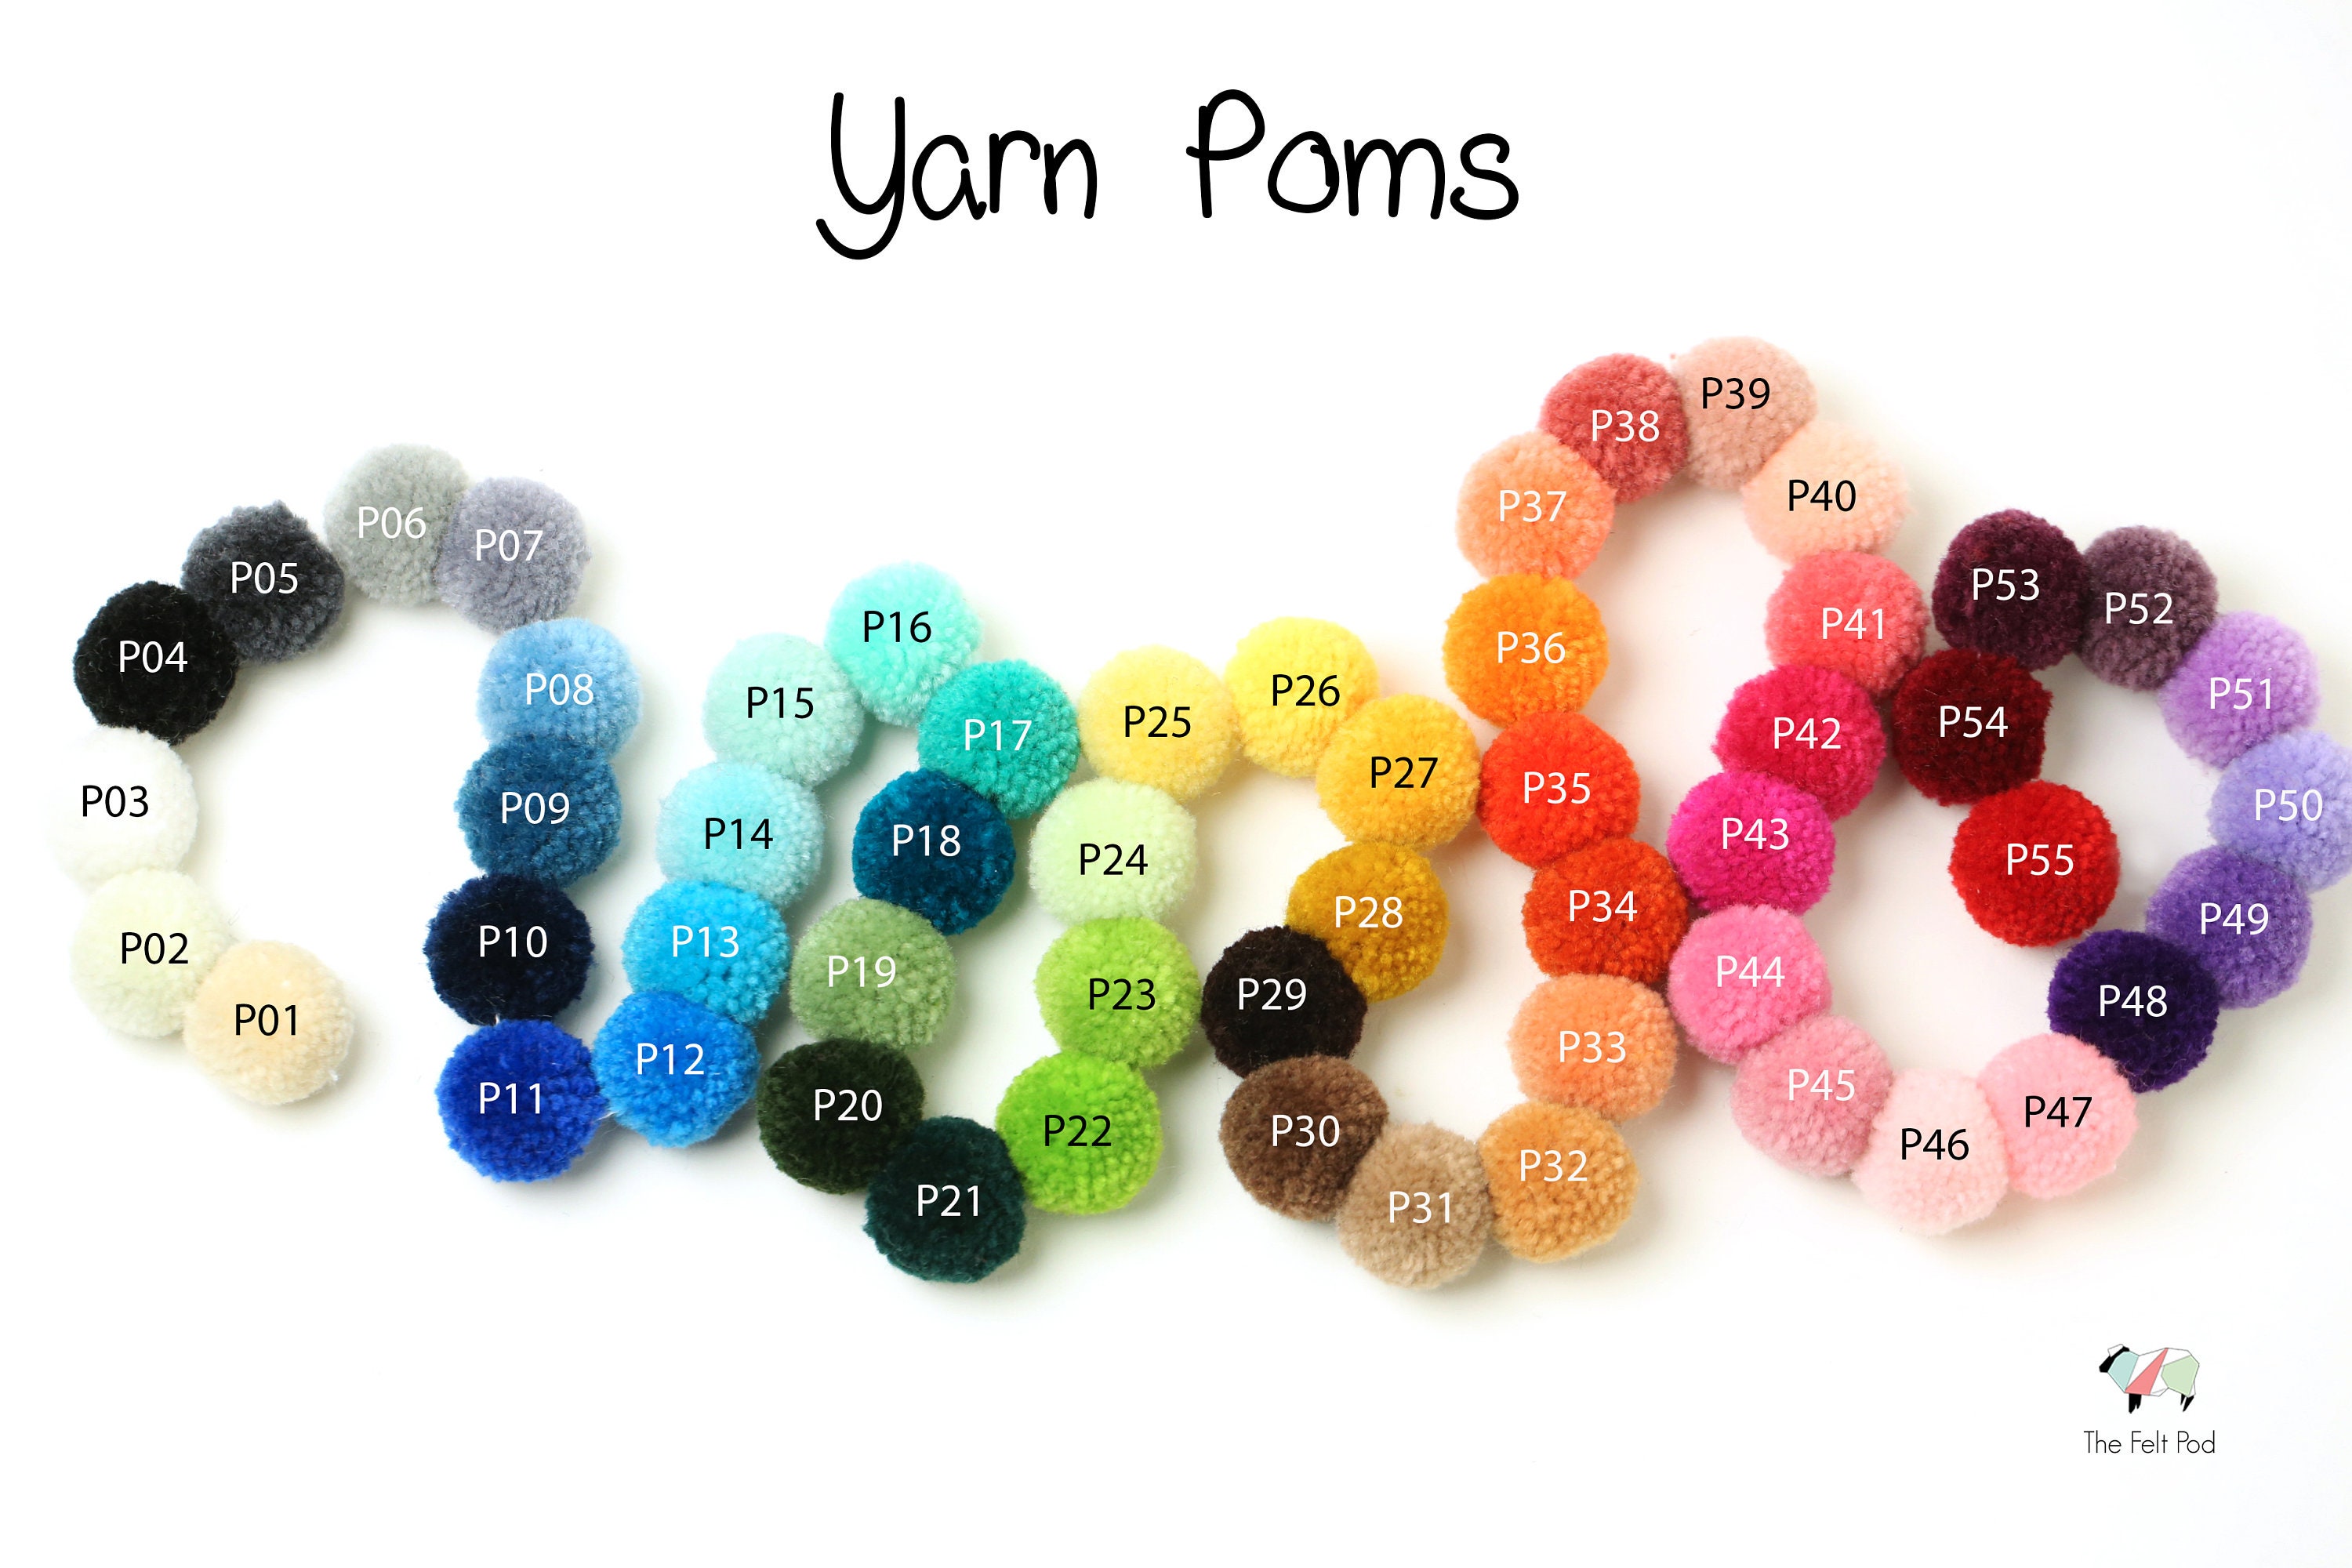 Yarn pom poms, yarn poms, garland poms, P54 Crimson, Crimson yarn poms,  Crimson pom poms, red pom poms, red yarn poms